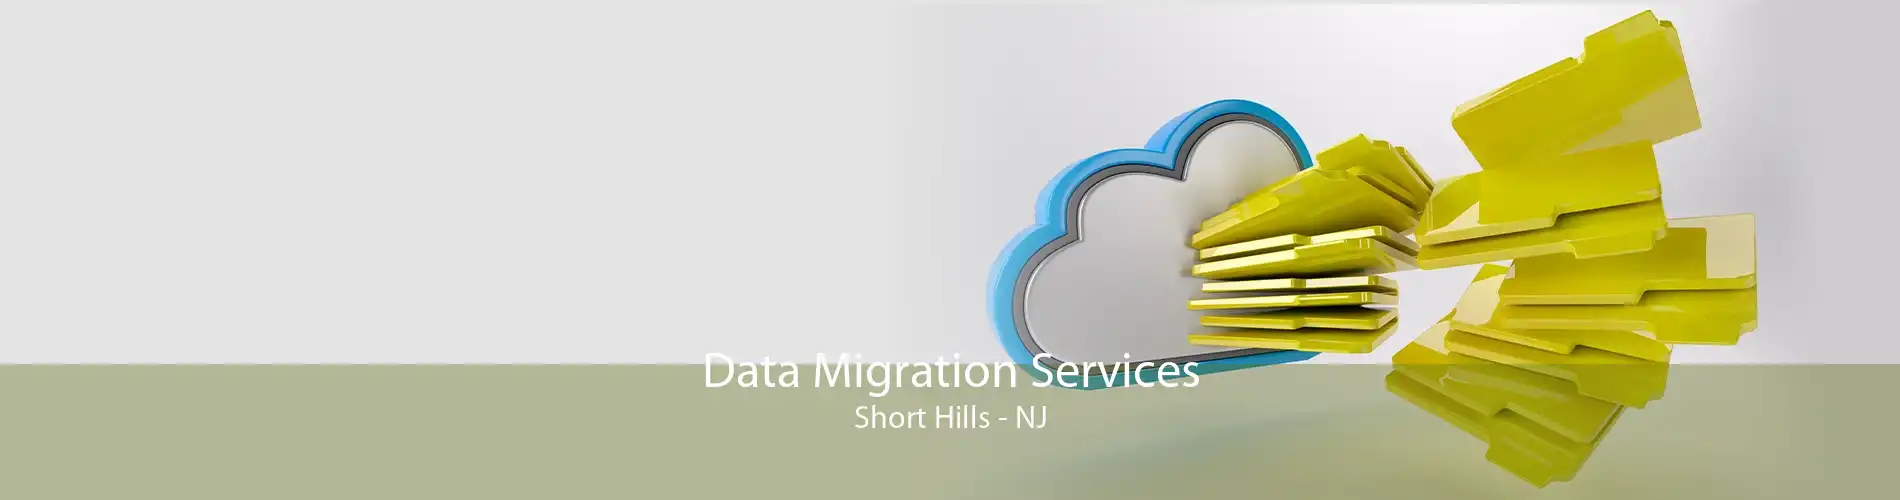 Data Migration Services Short Hills - NJ